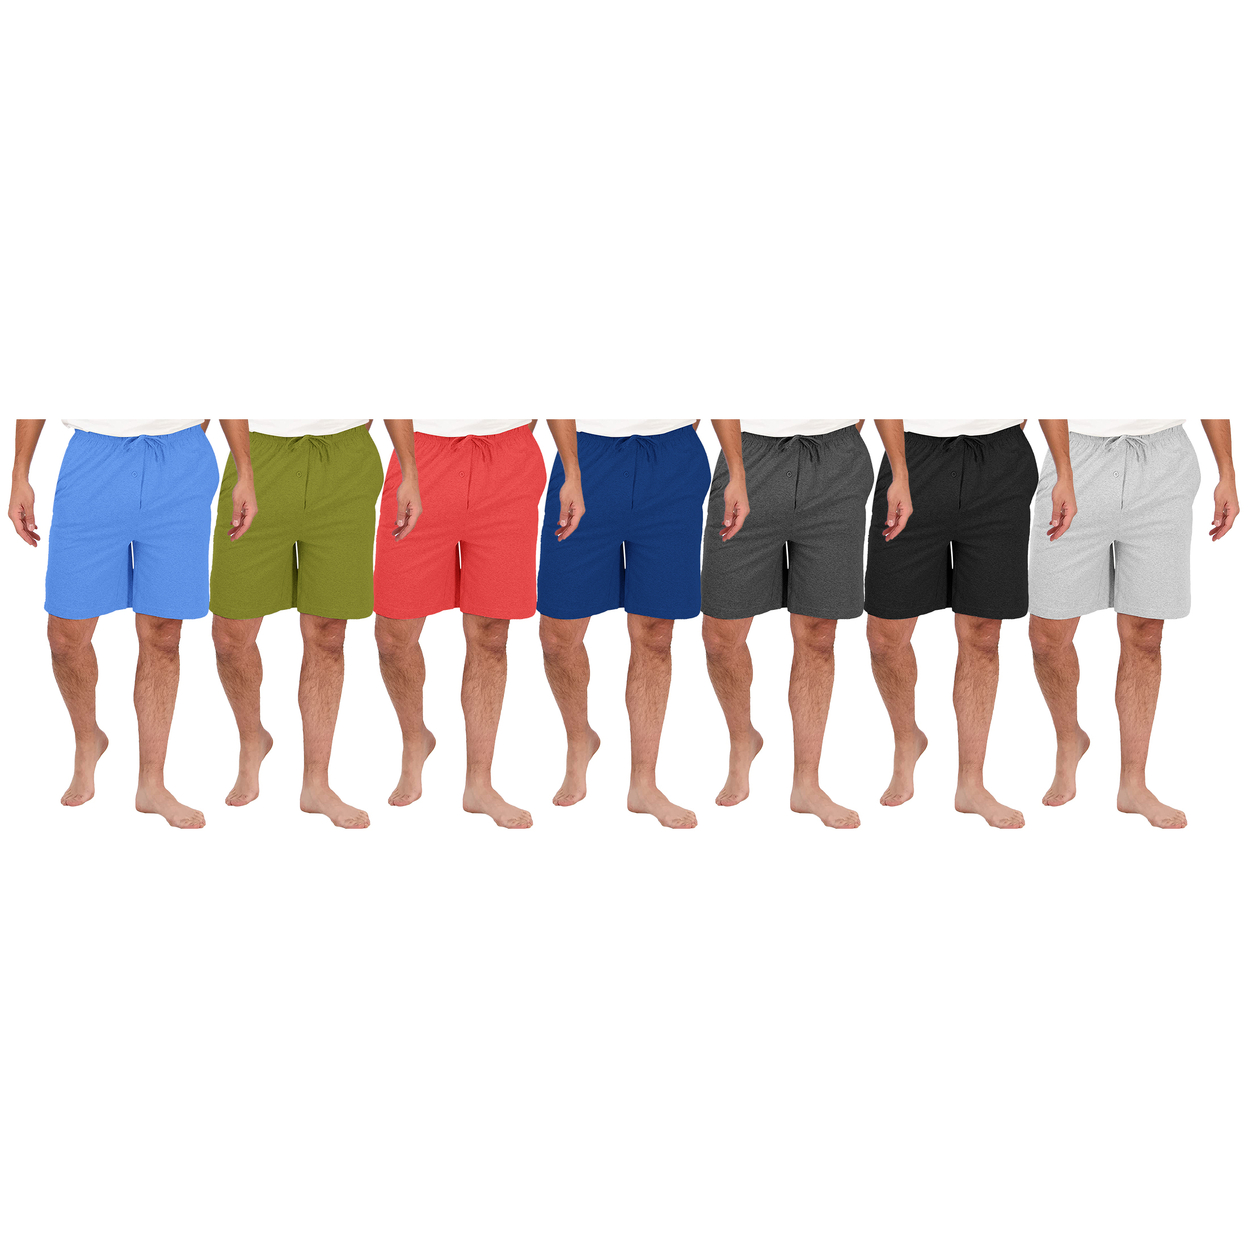 2-Pack: Men's Ultra-Soft Jersey Knit Lounge Sleep Pajama Shorts - X-large